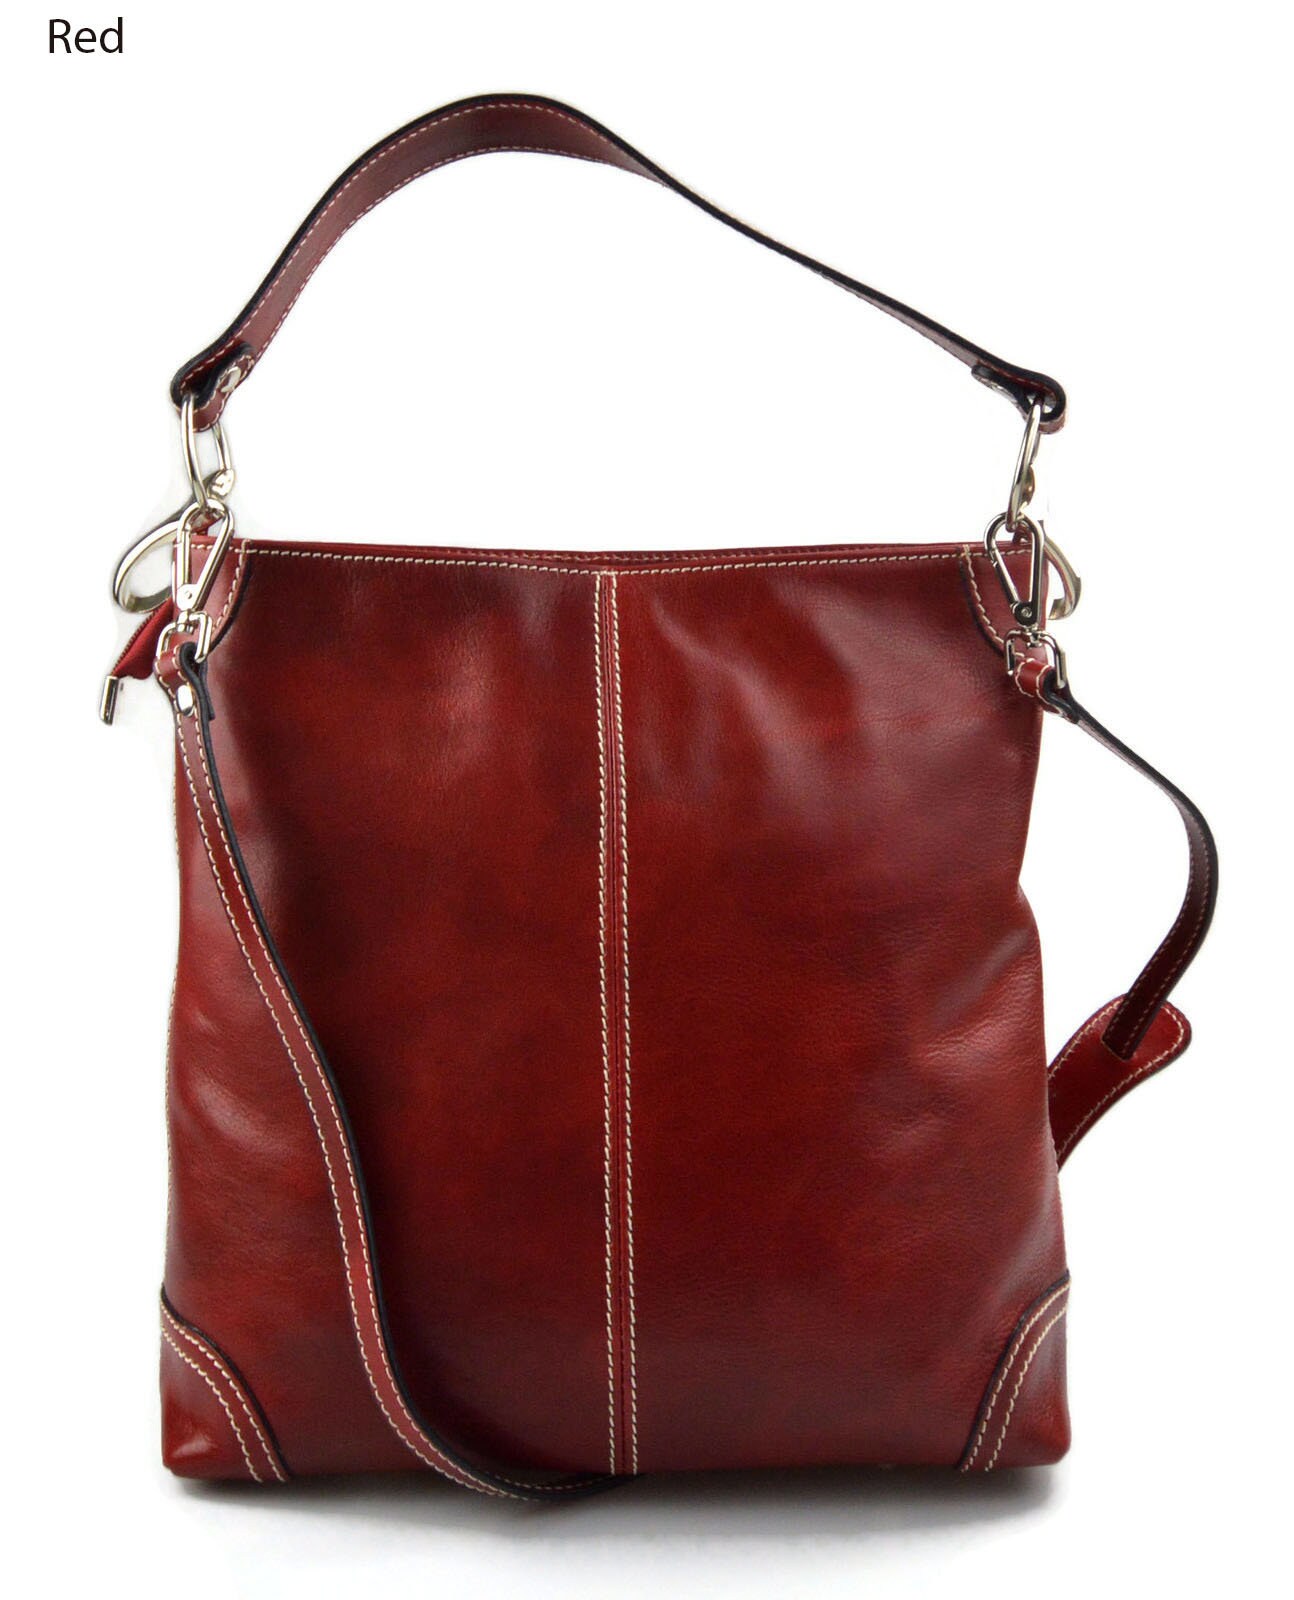 Leather women handbag shoulder bag luxury bag women handbag | Etsy